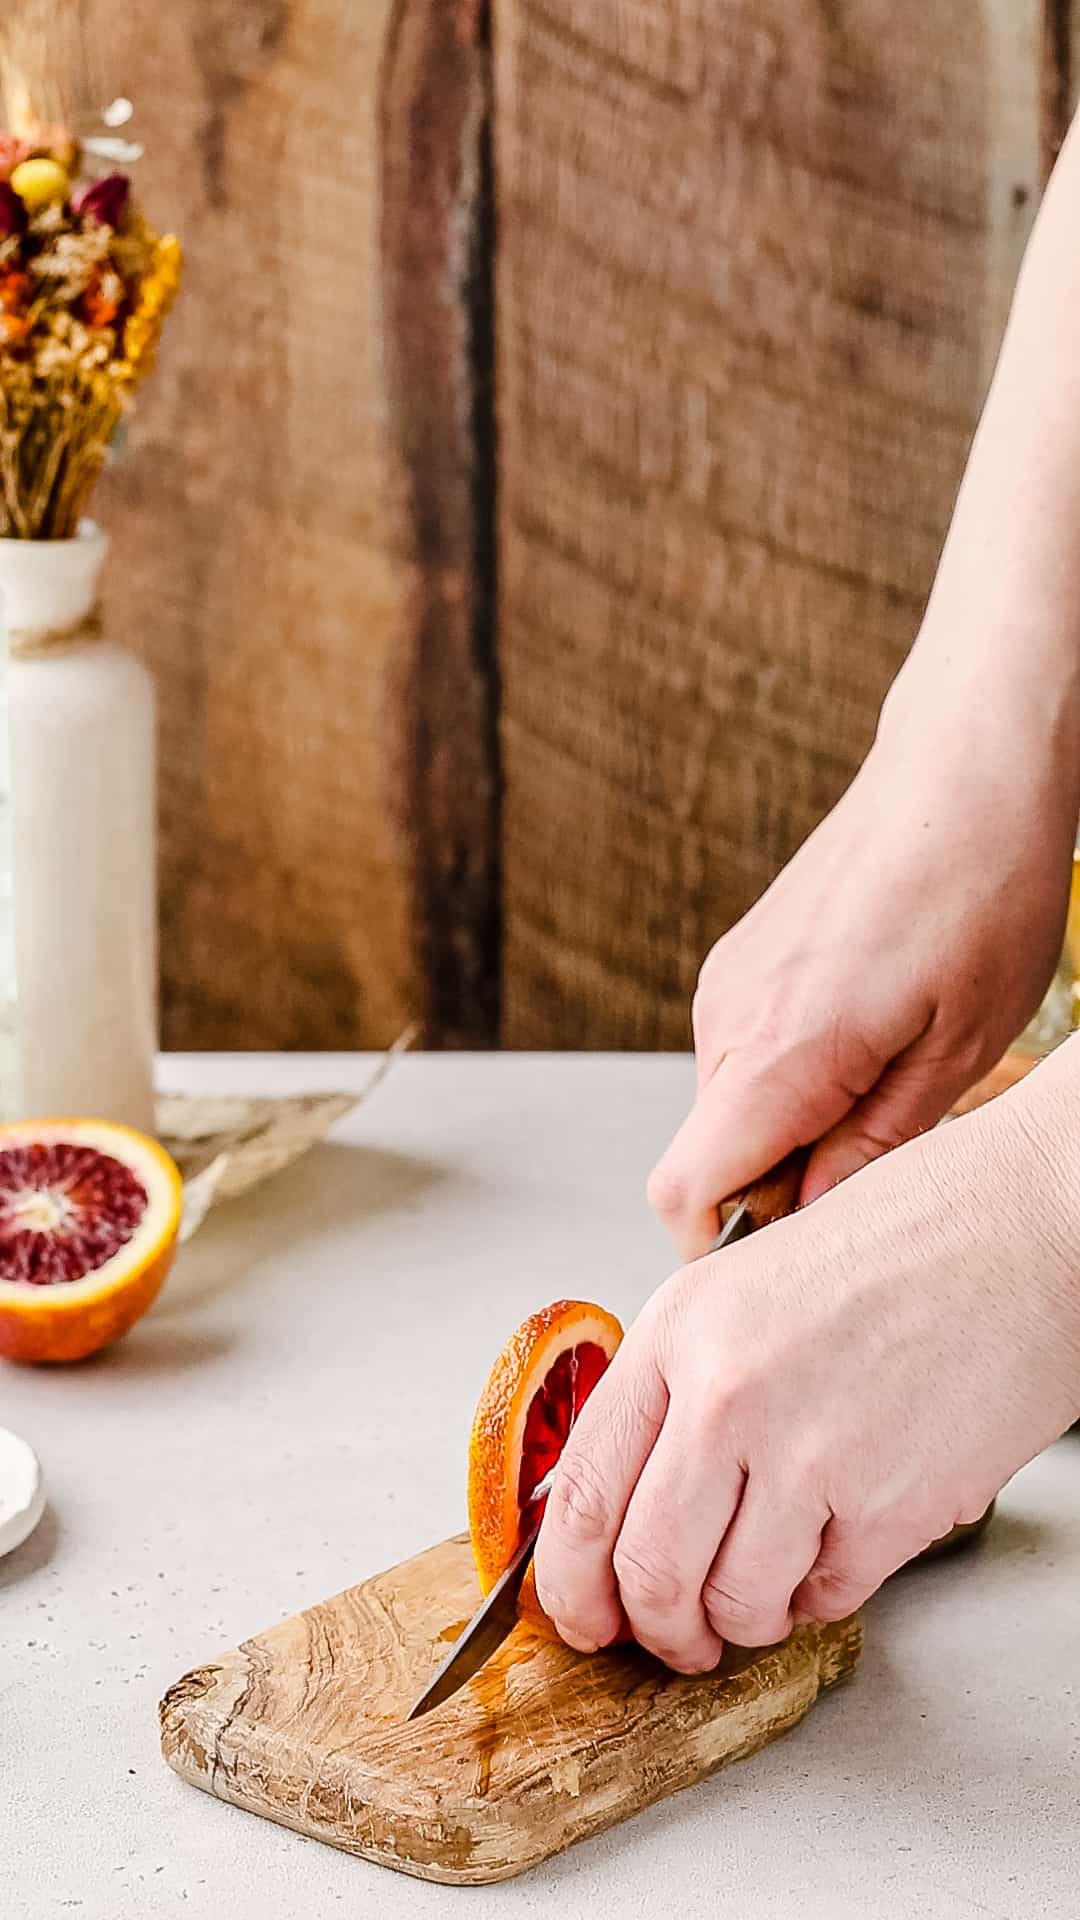 Hands slicing a blood orange on a cutting board.